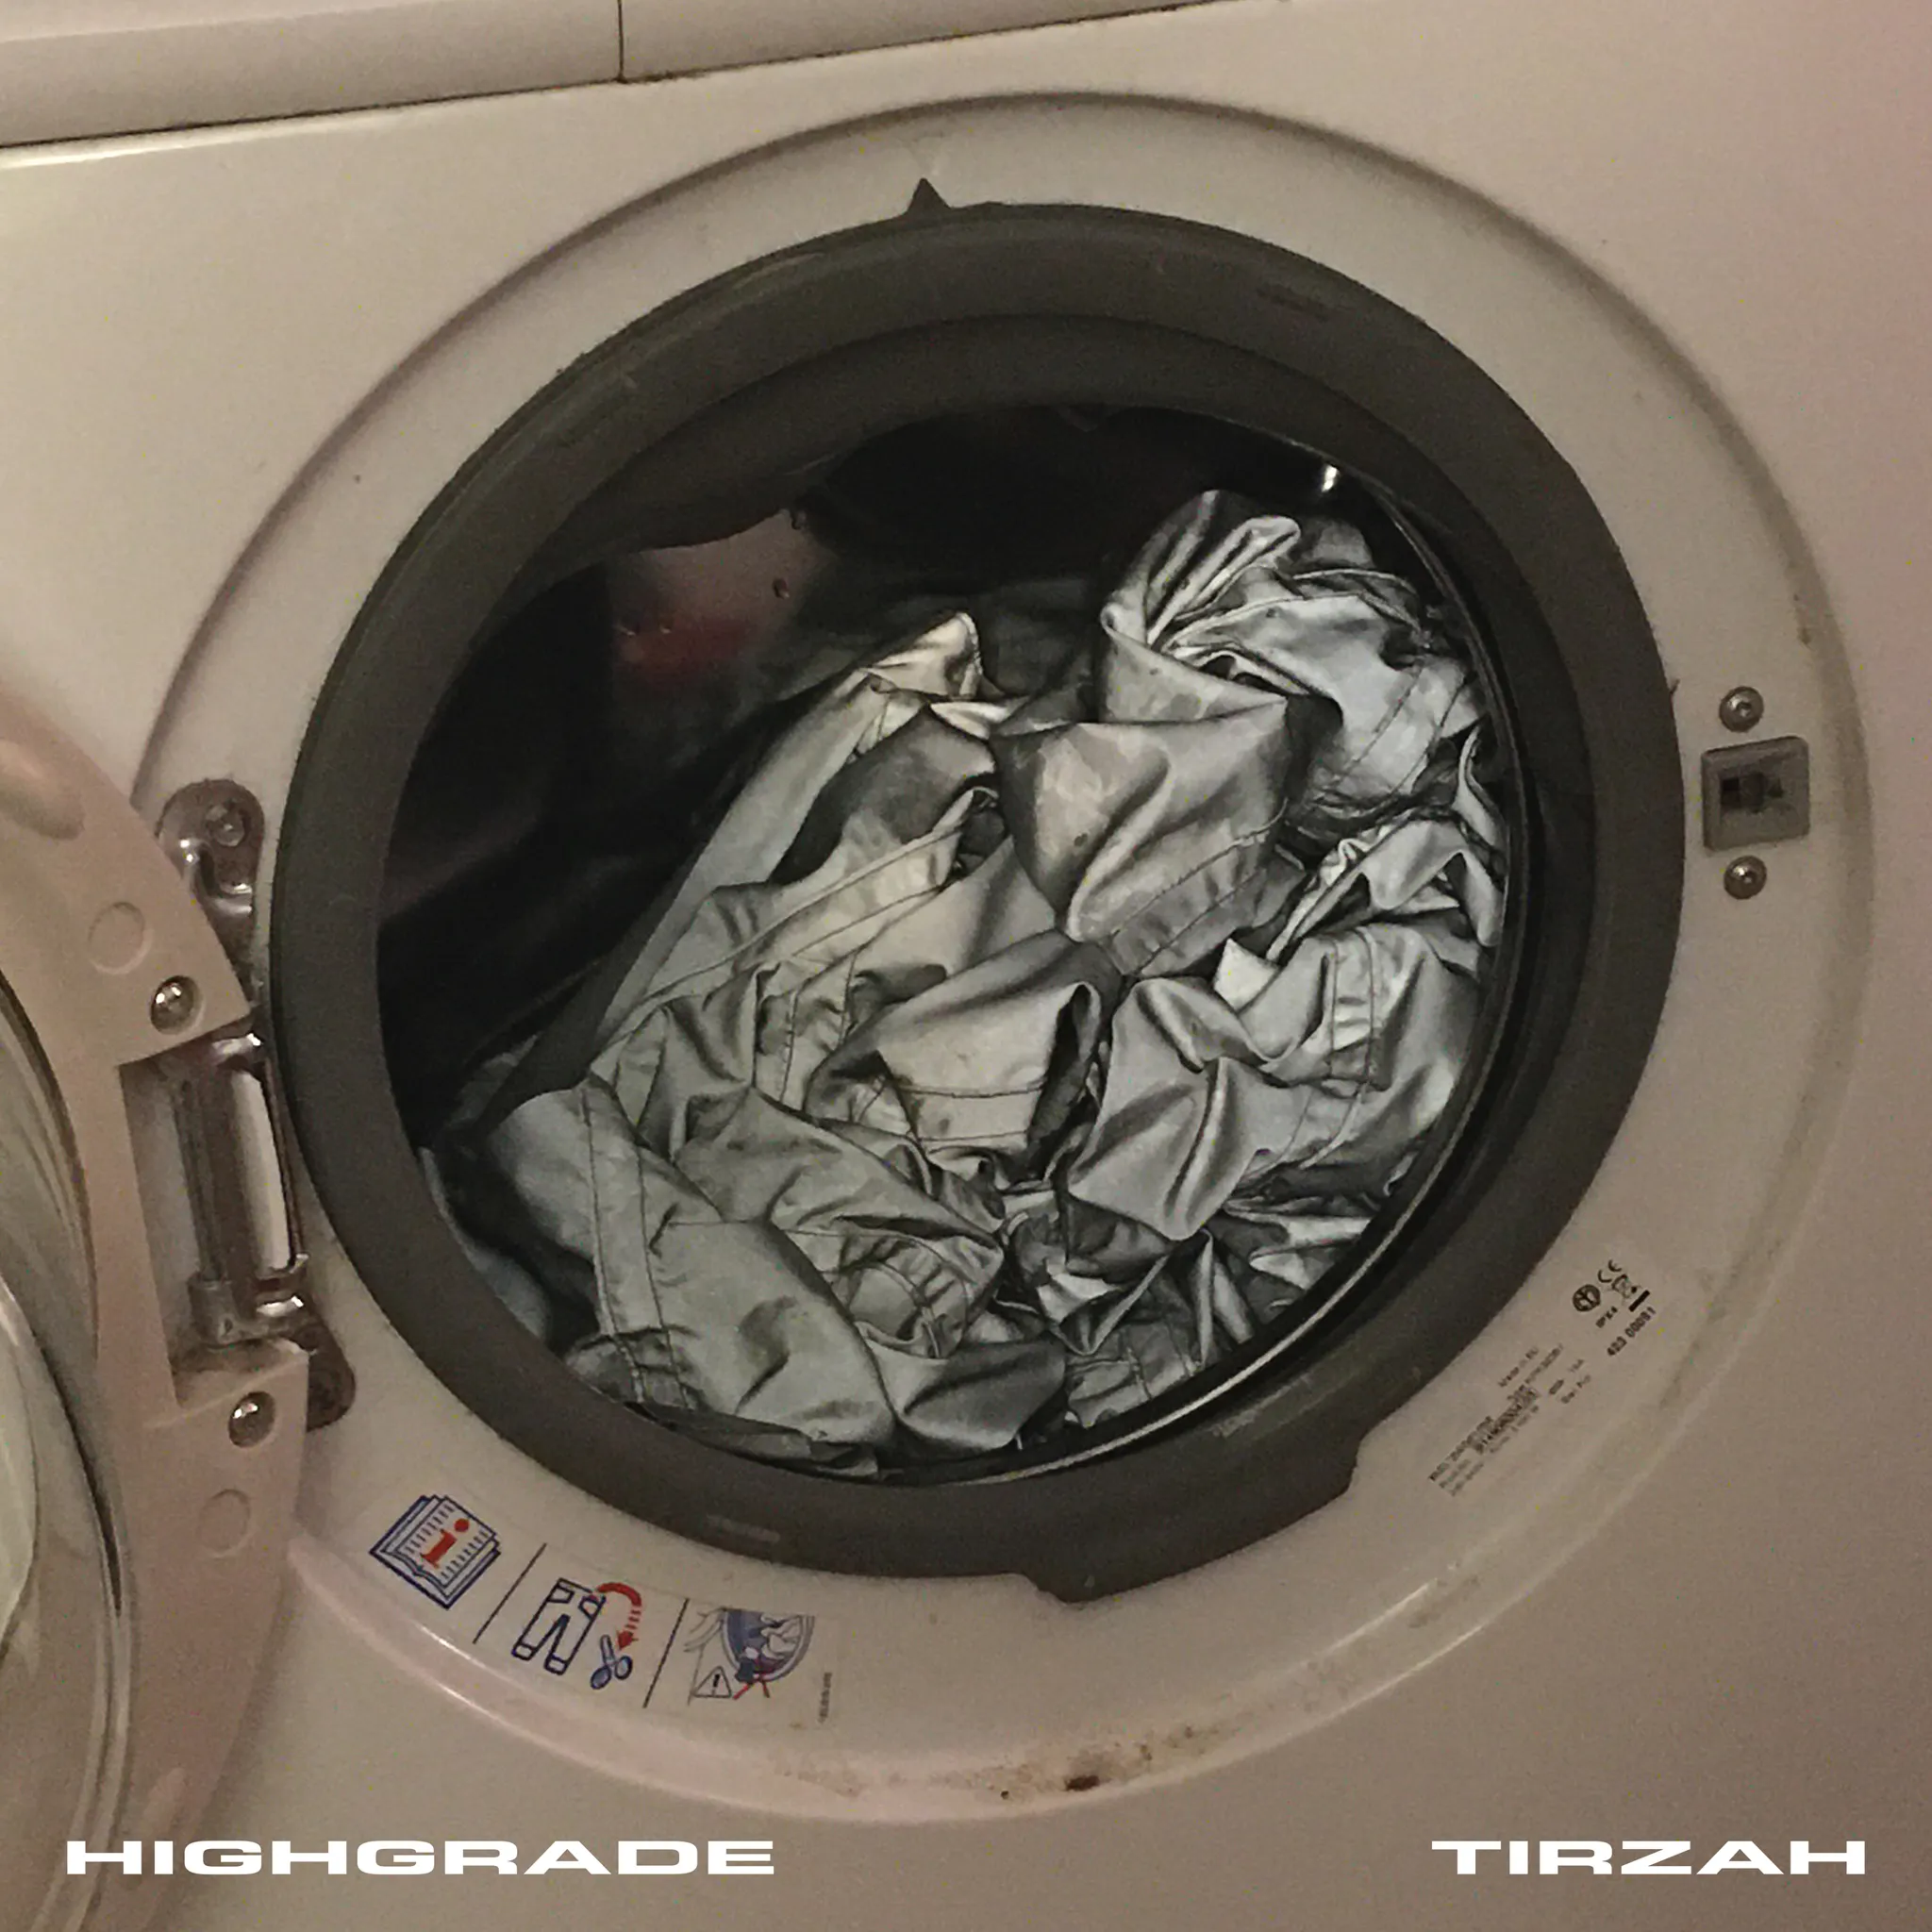 <strong>Tirzah - Highgrade</strong> (Vinyl LP - black)